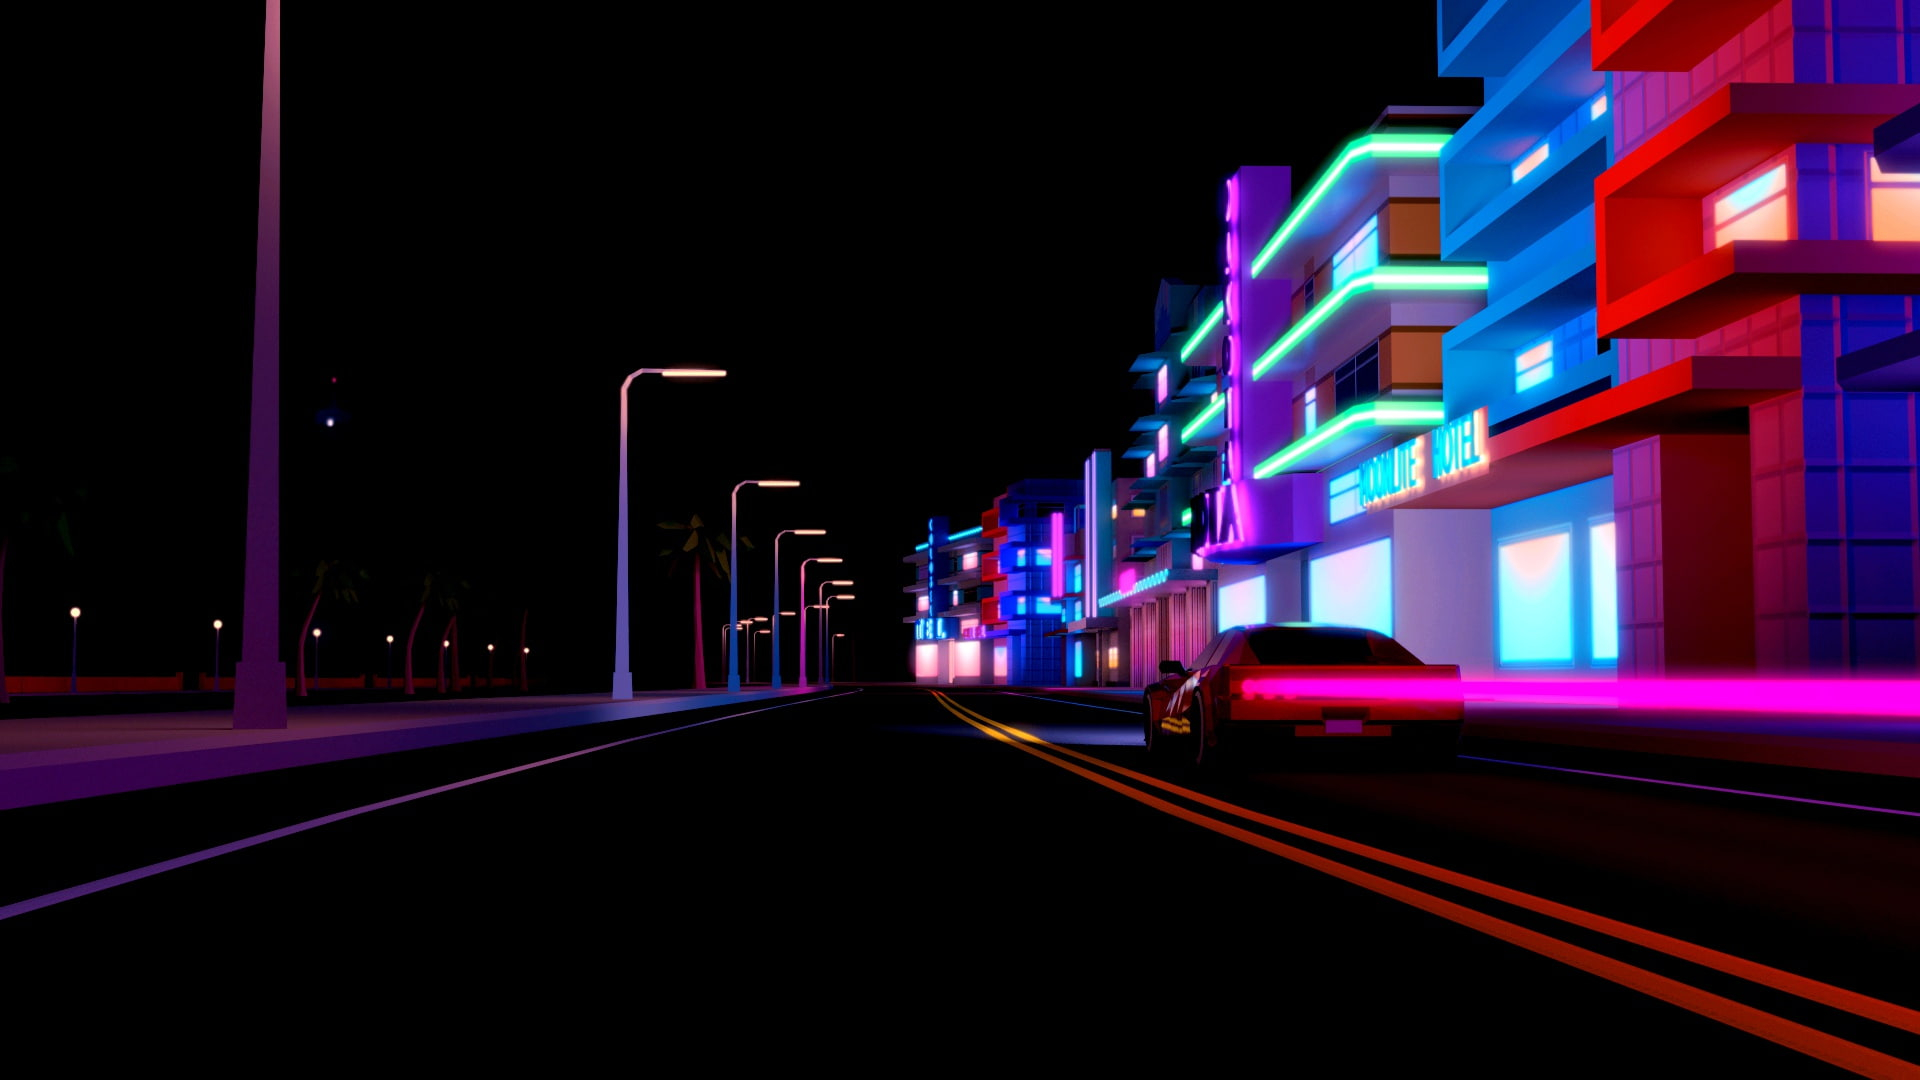 Auto, Road, Night, Music, The city, Neon, Machine, Background